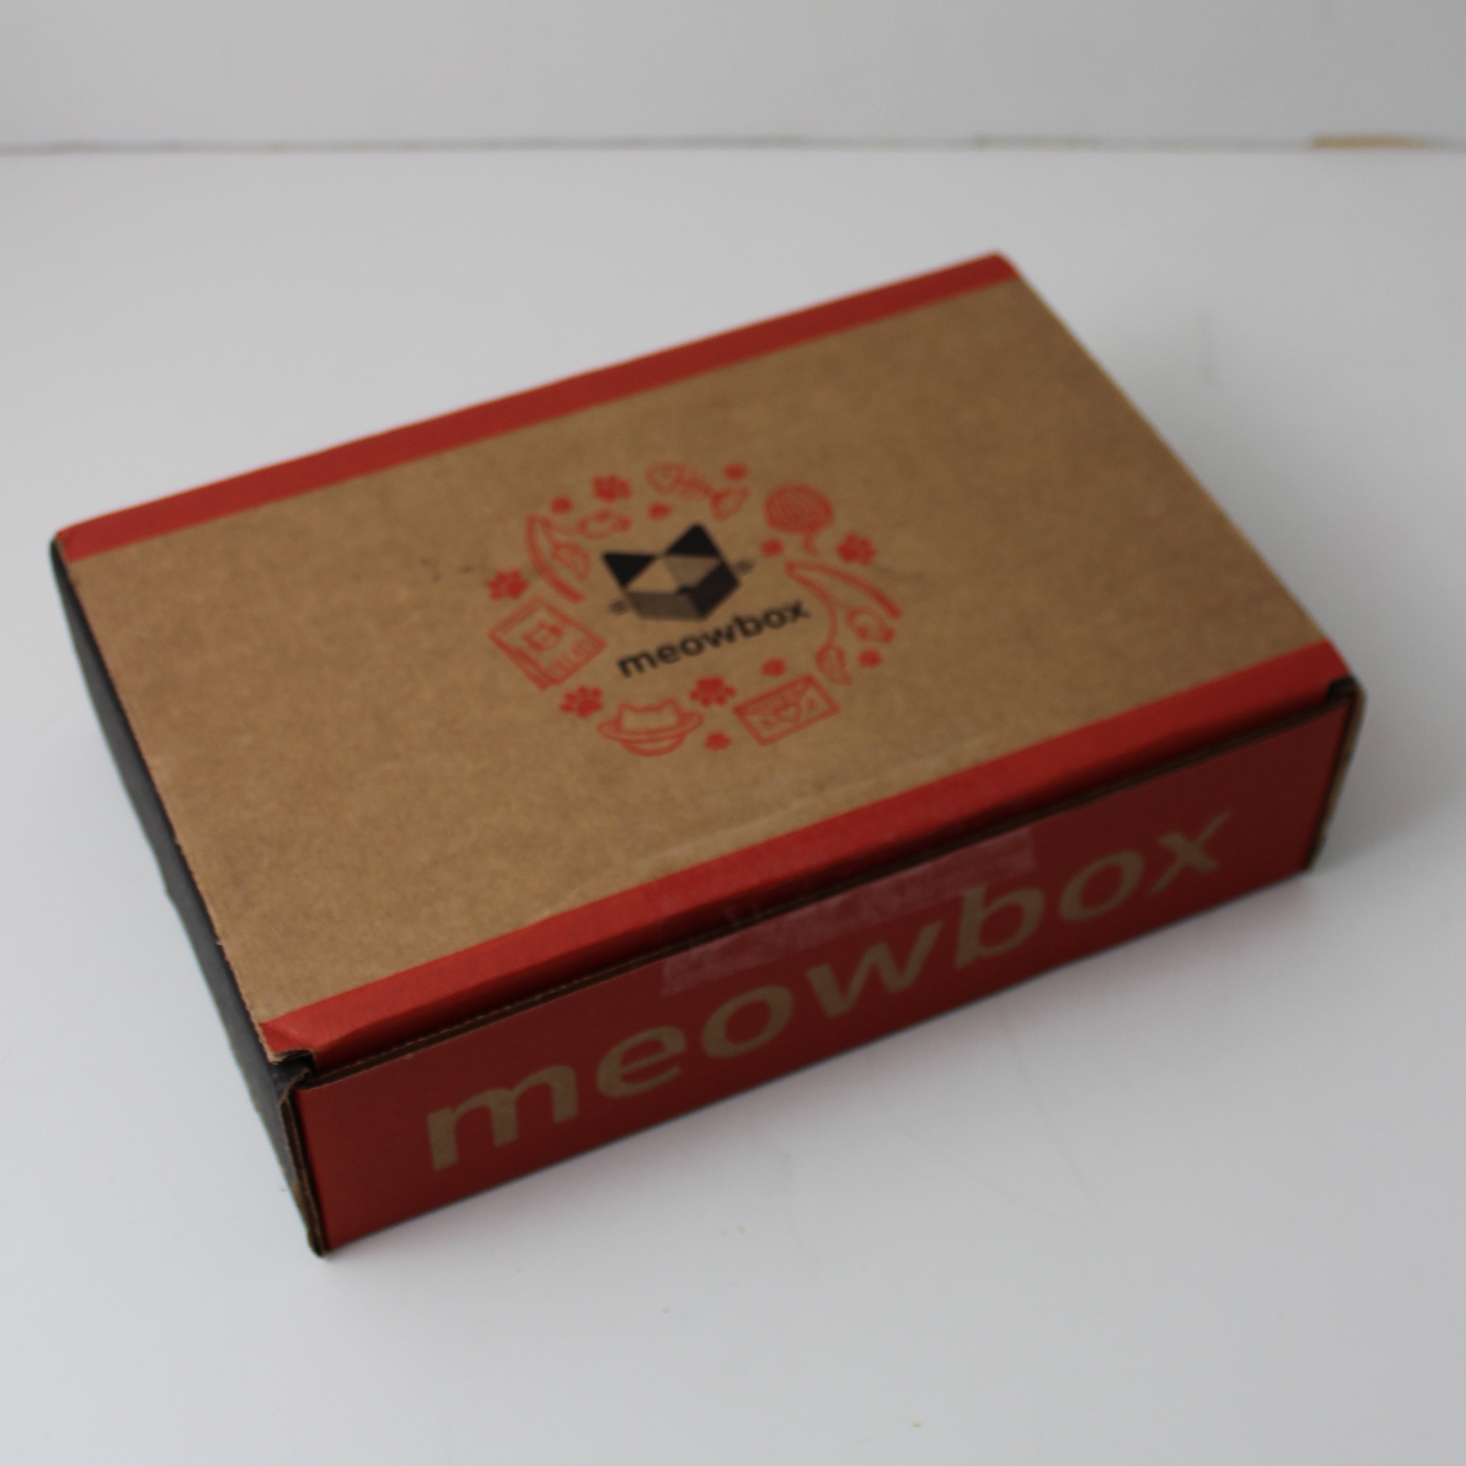 meowbox Cat Subscription Review + Coupon – April 2020